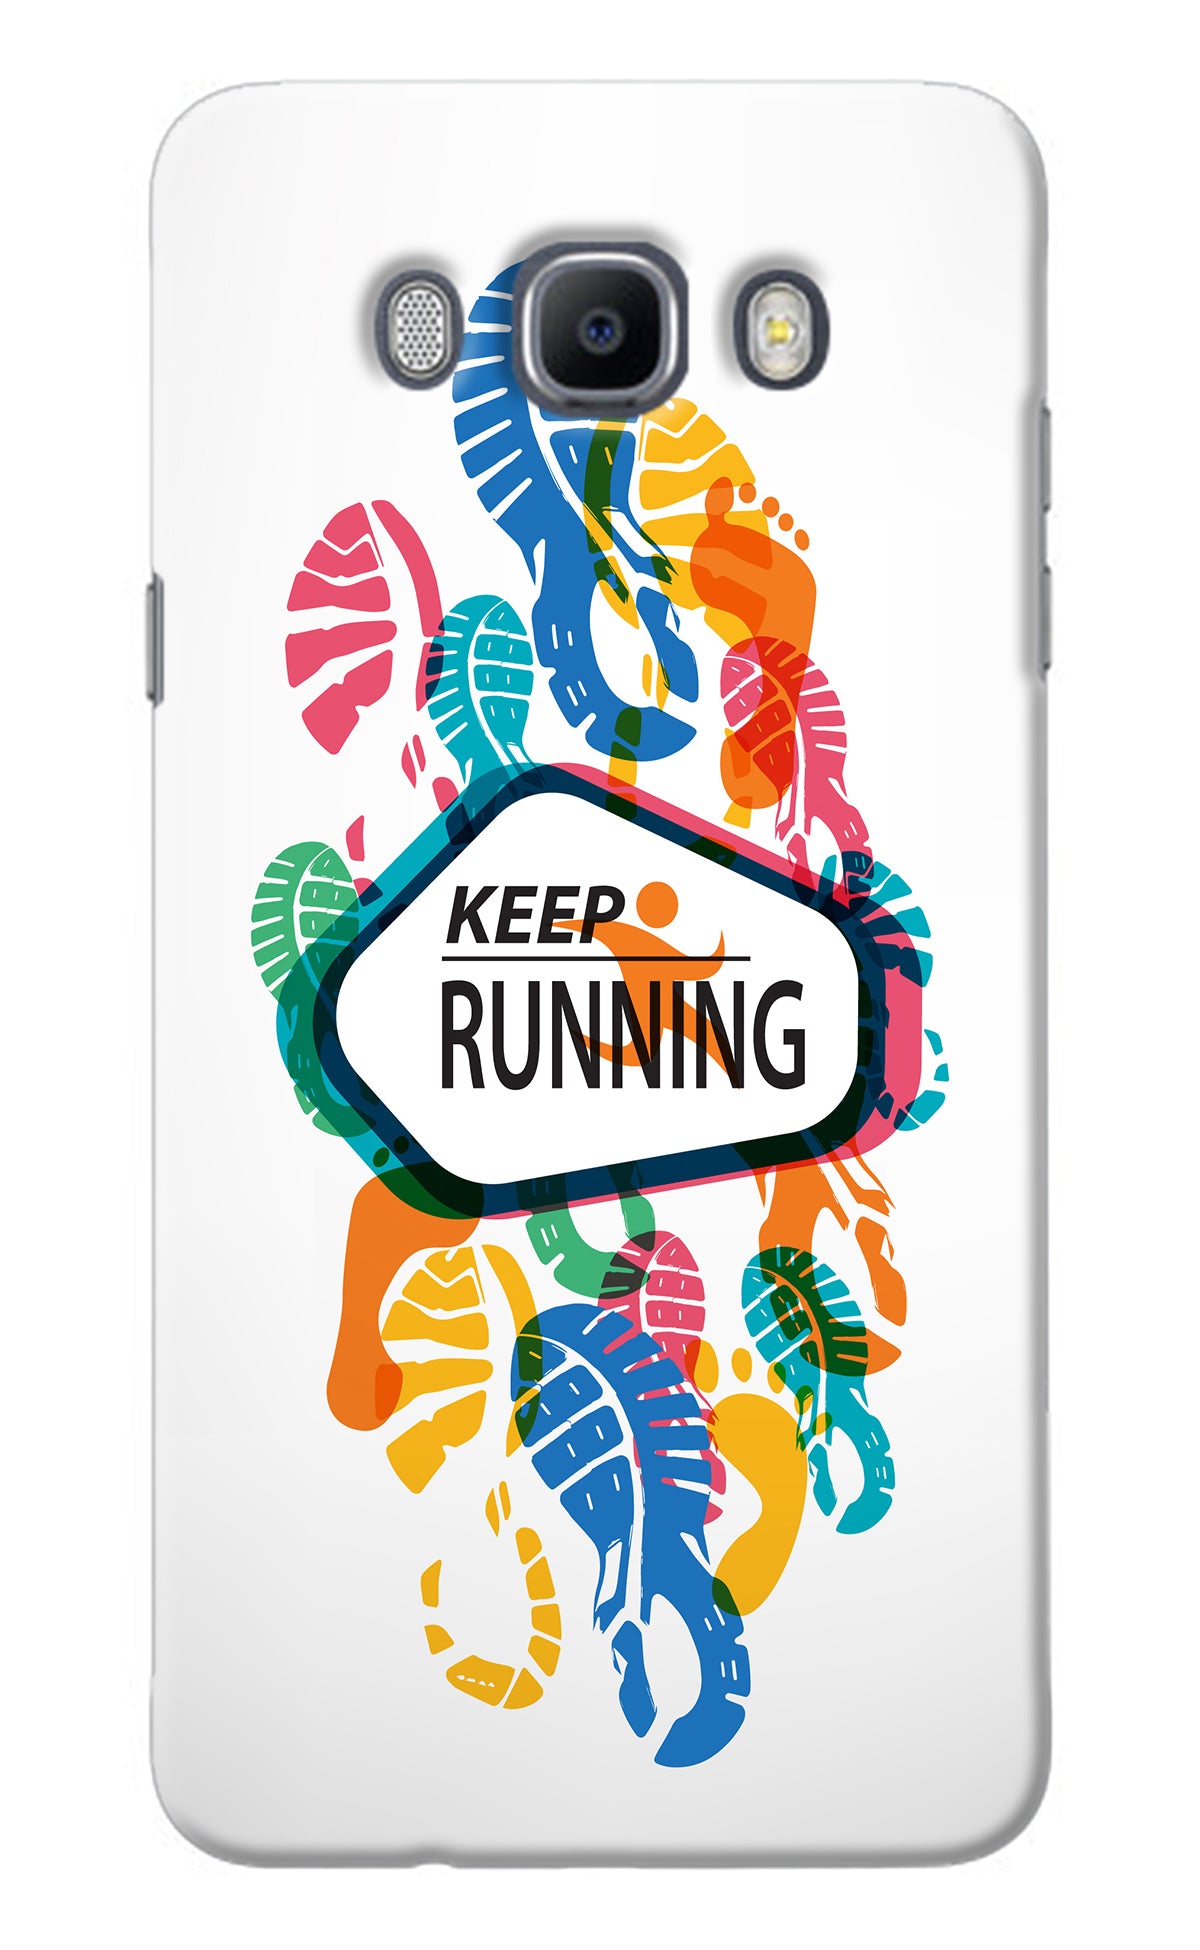 Keep Running Samsung J7 2016 Back Cover